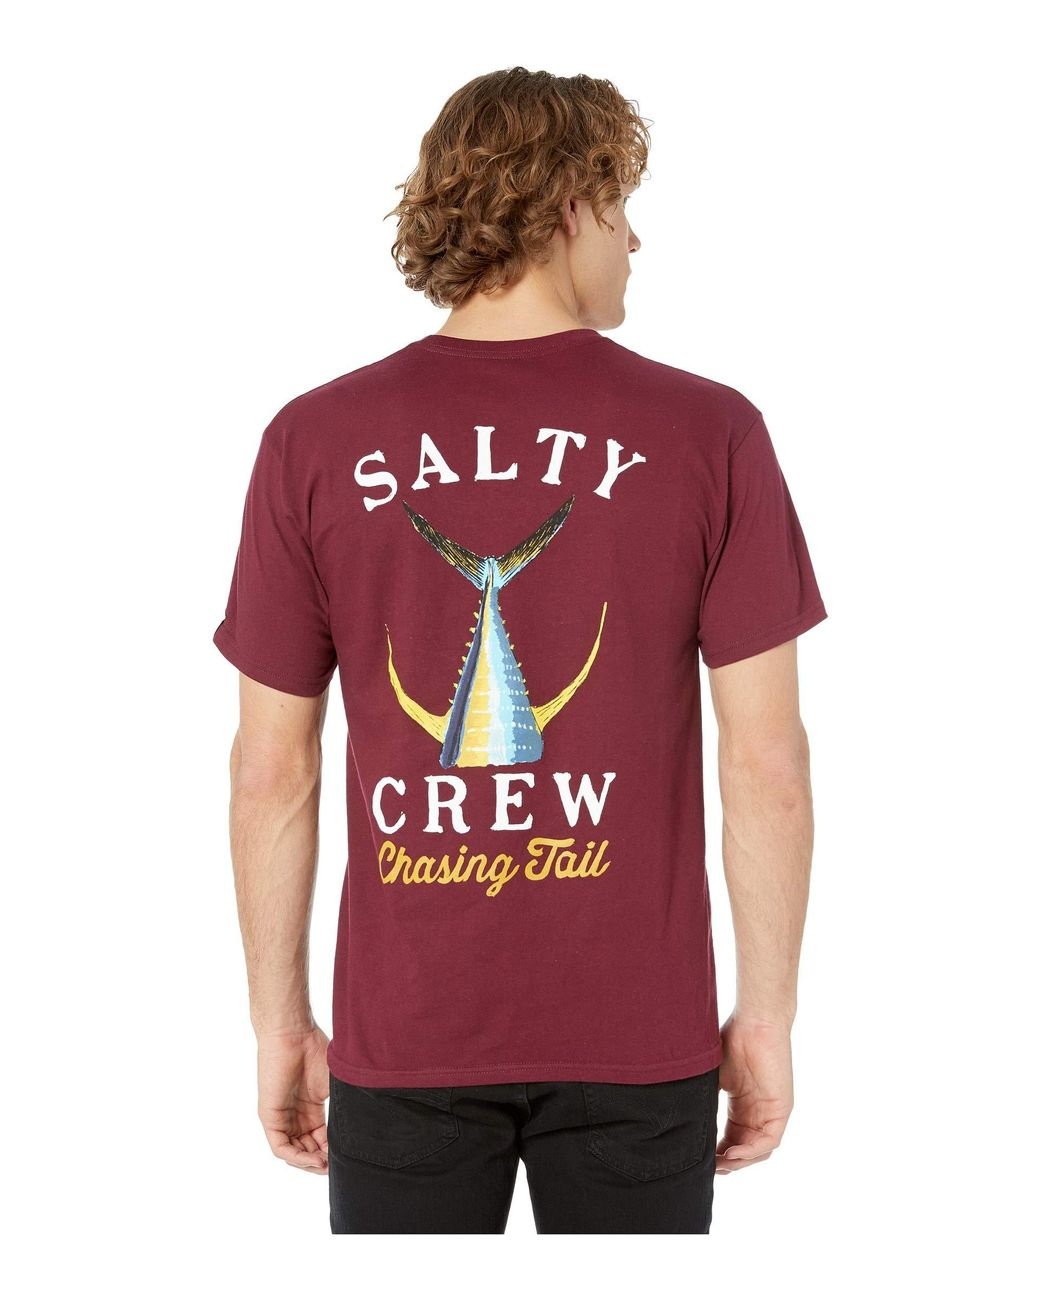 Salty Crew Salty Crew Tailed Tee